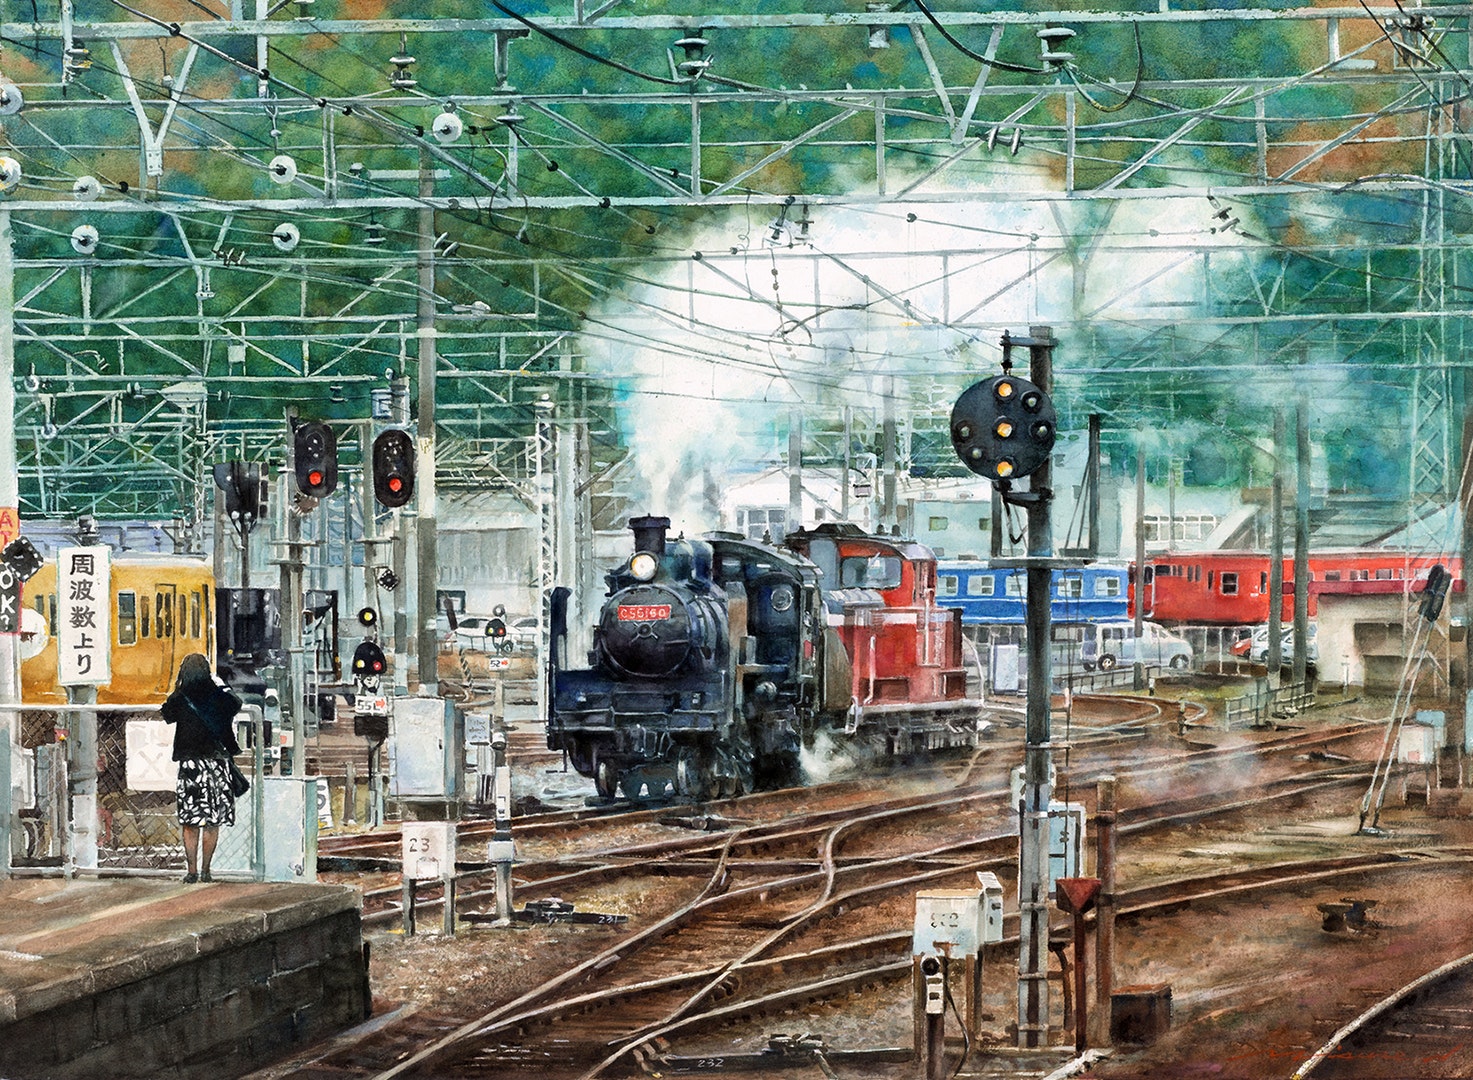 'Steam train station', Misure Nien, Watercolor on paper, 56 x 79 cm